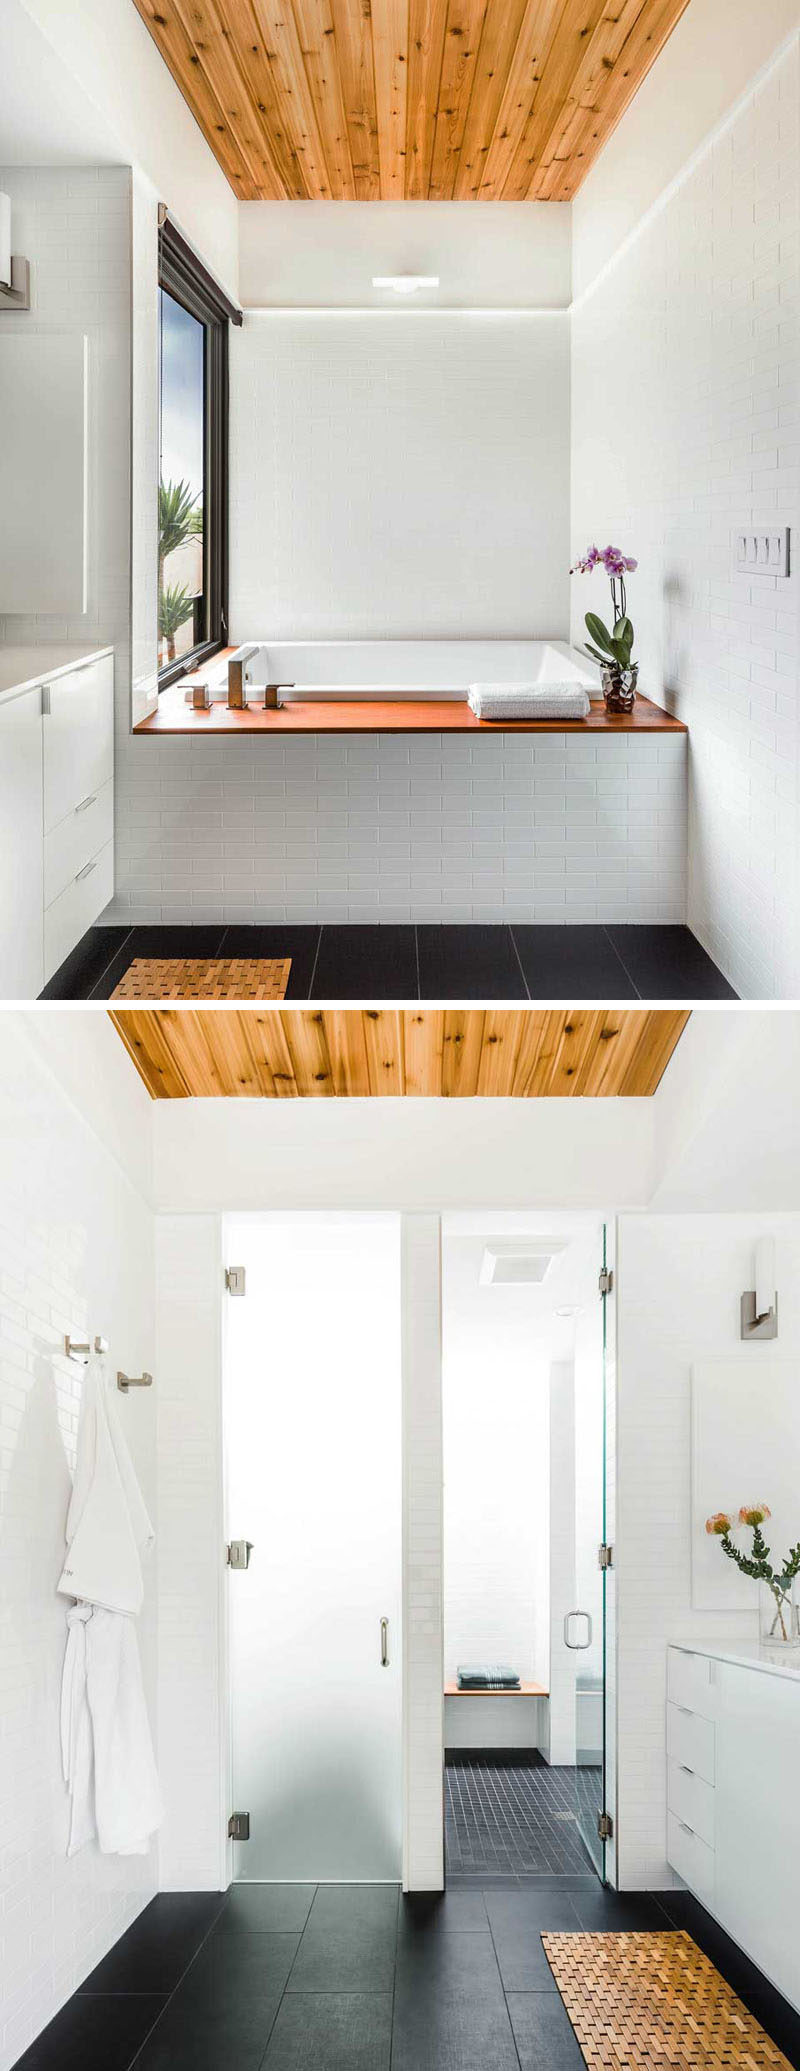 Bathroom Design Idea - Create a Spa-Like Bathroom At Home // Include crisp white walls and touches of wood.